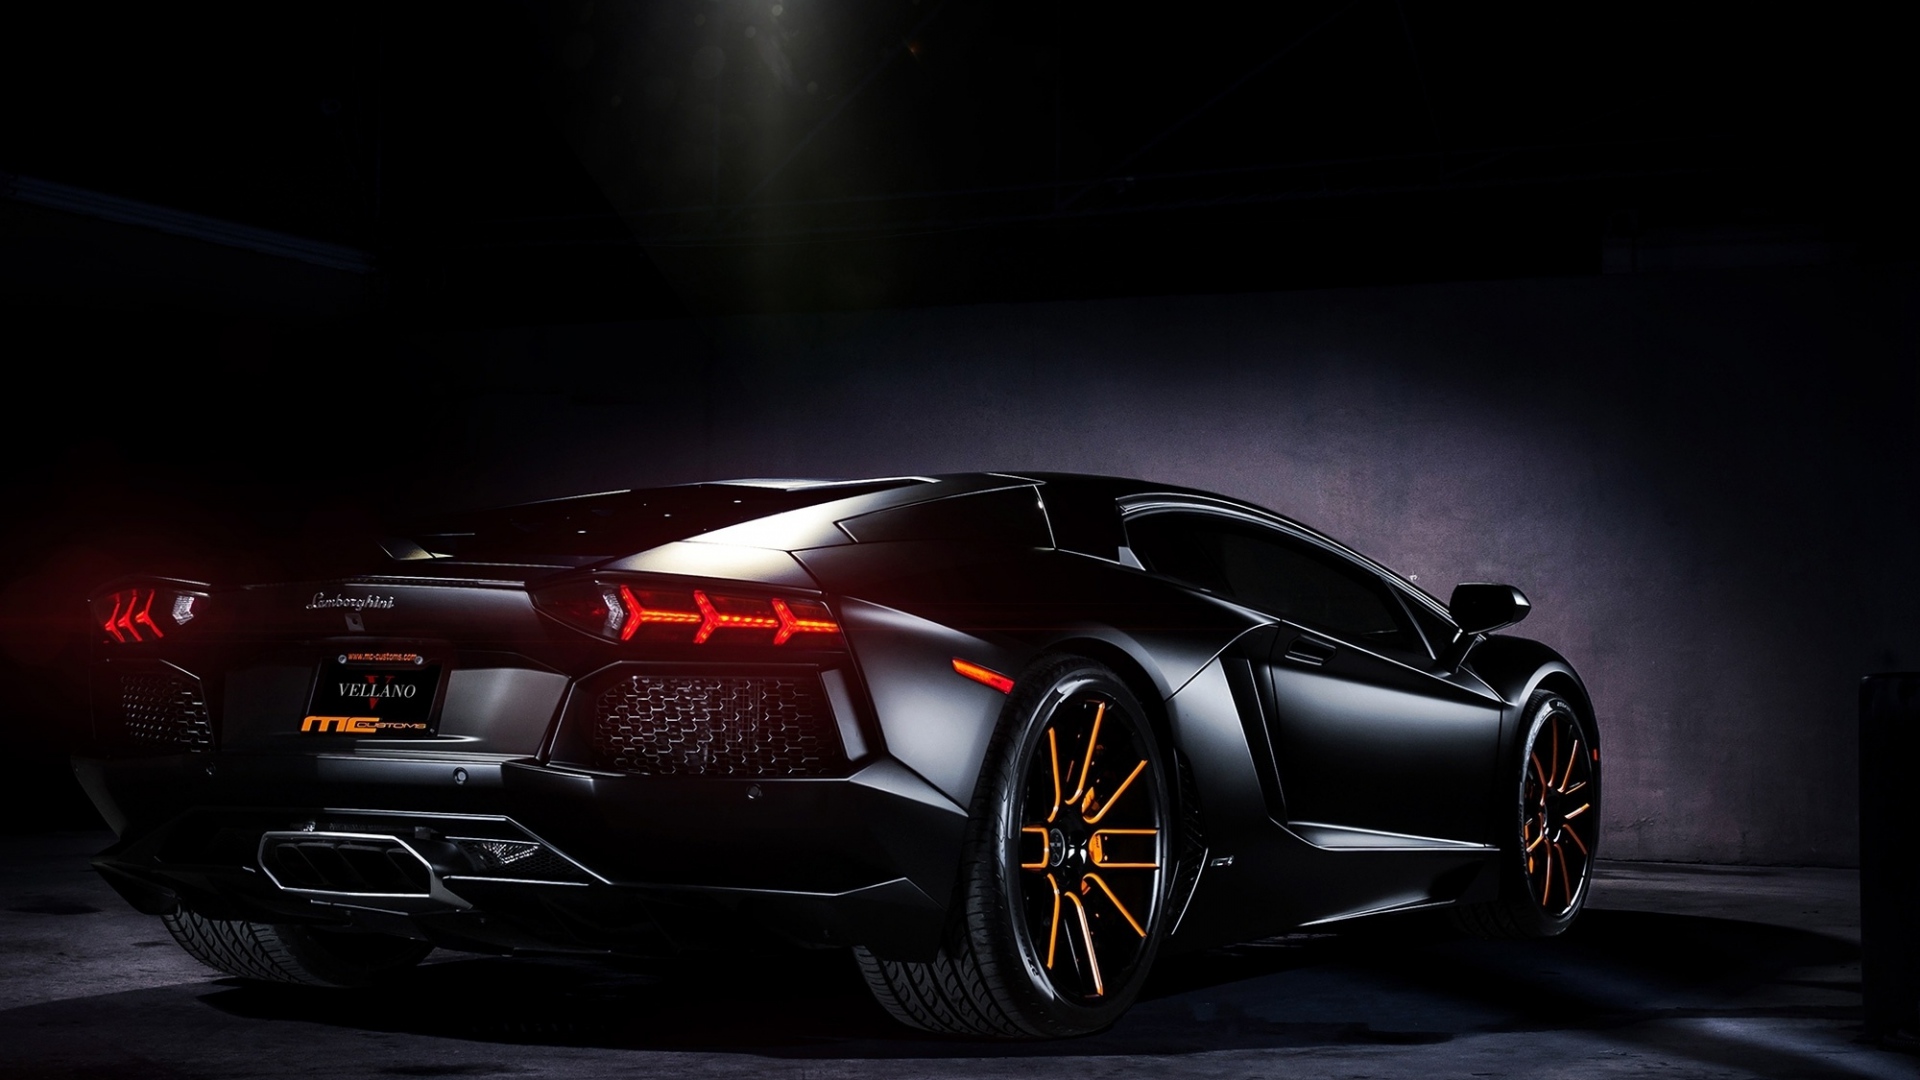 Amazing car with Black background